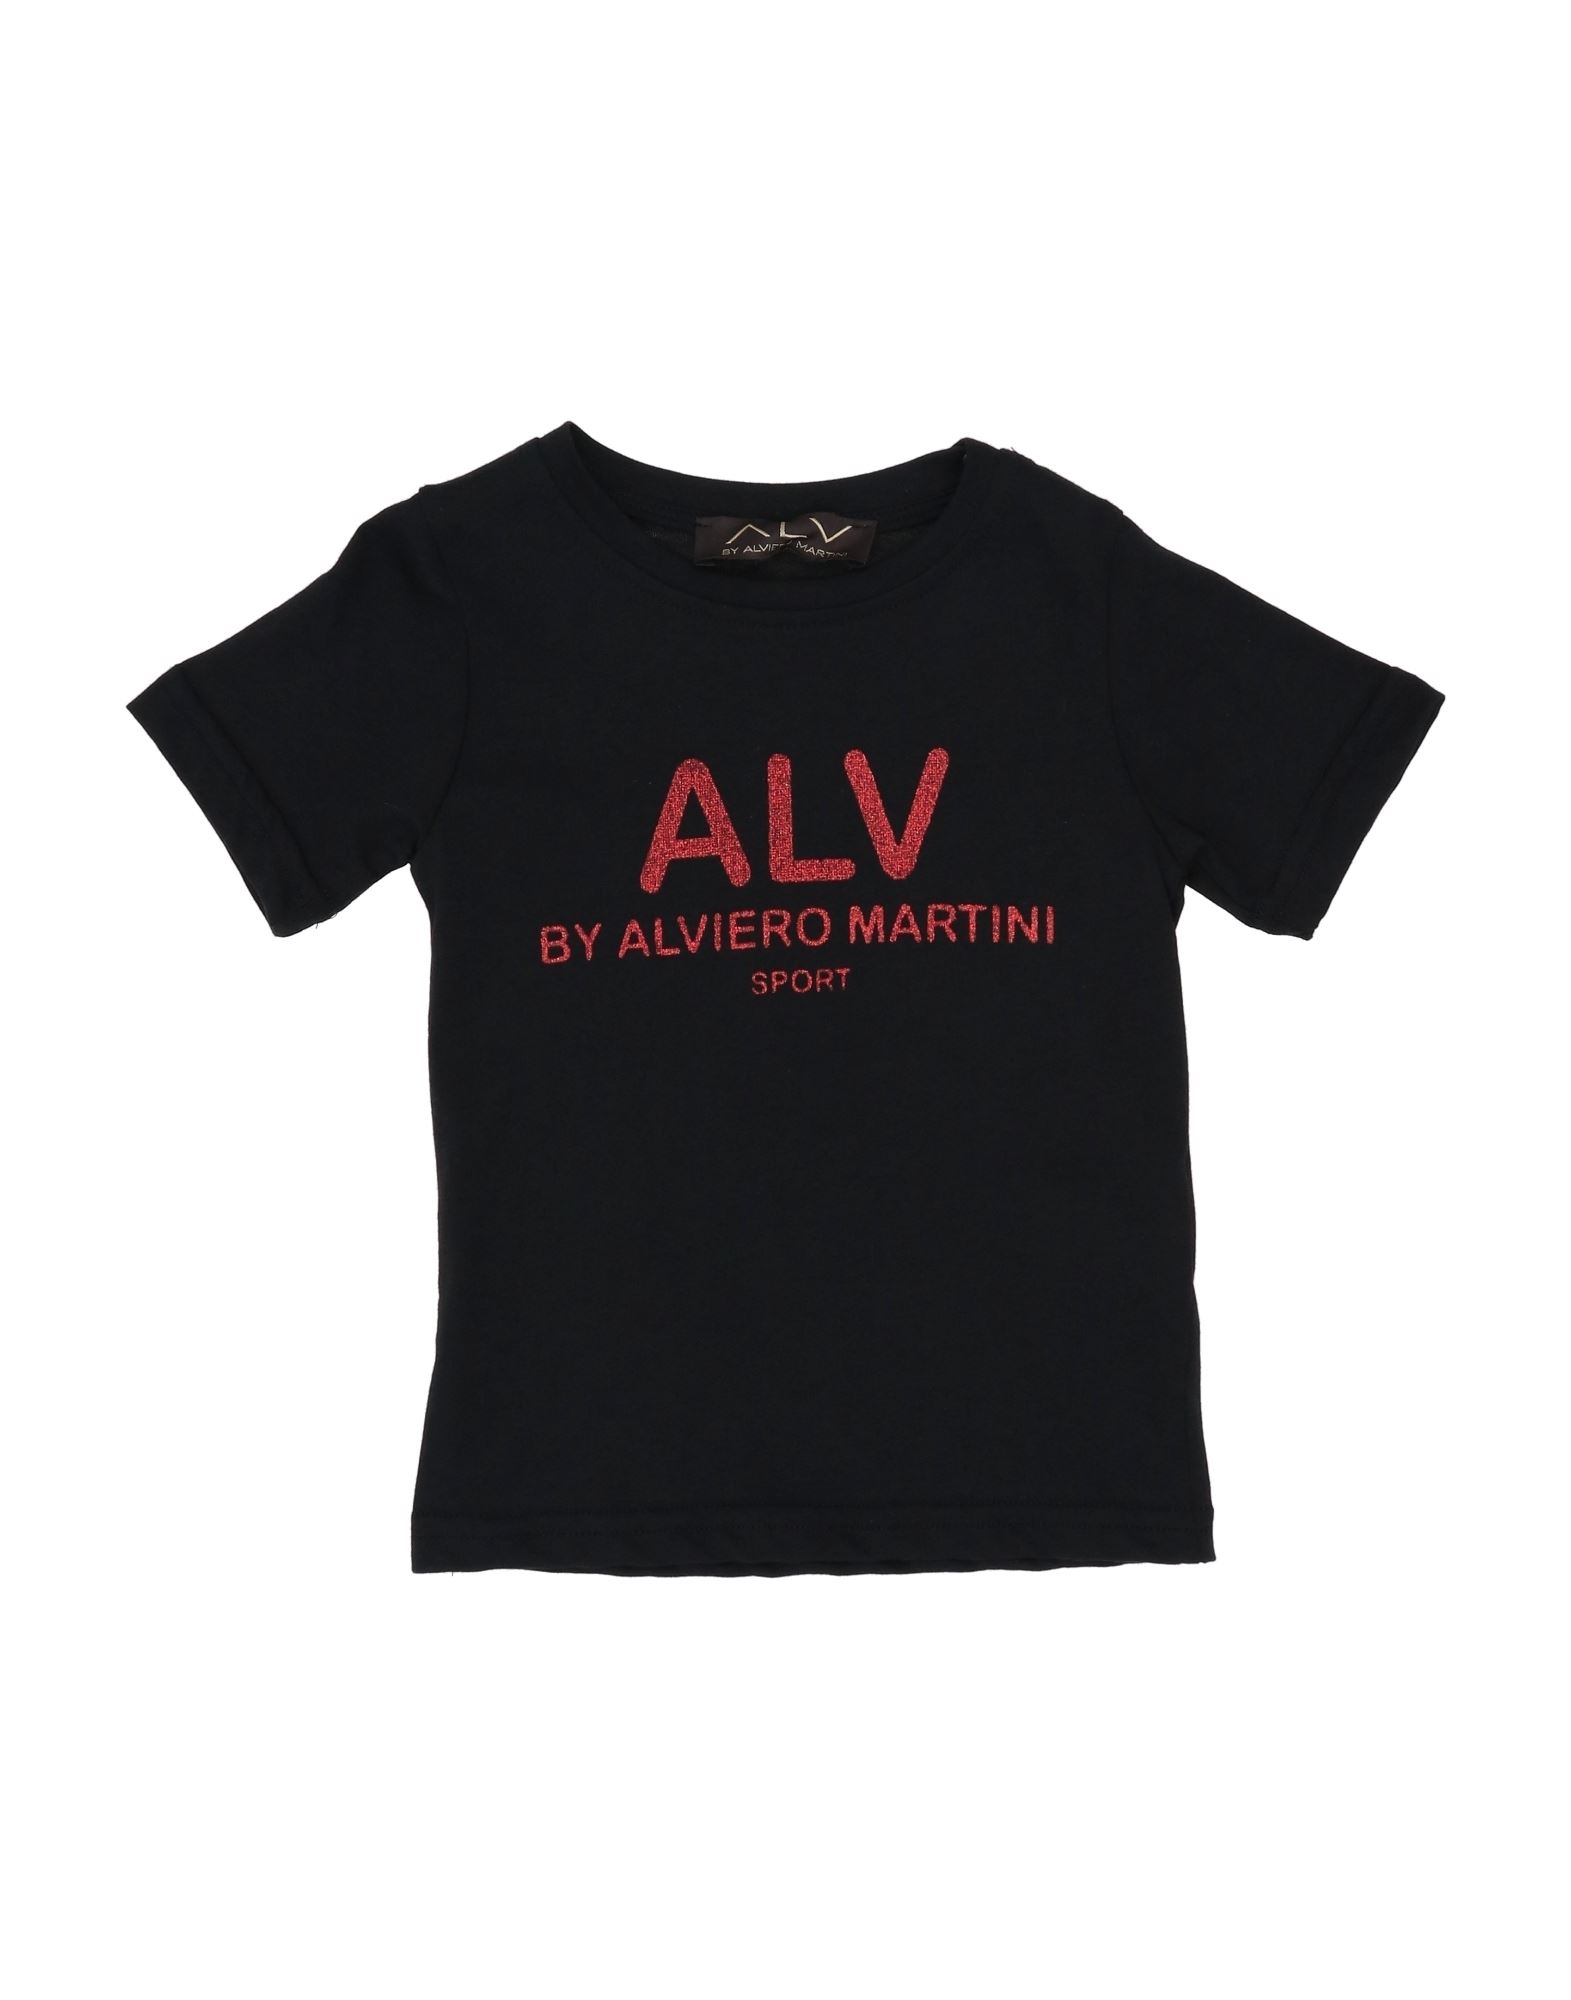 ALV BY ALVIERO MARTINI T-SHIRTS